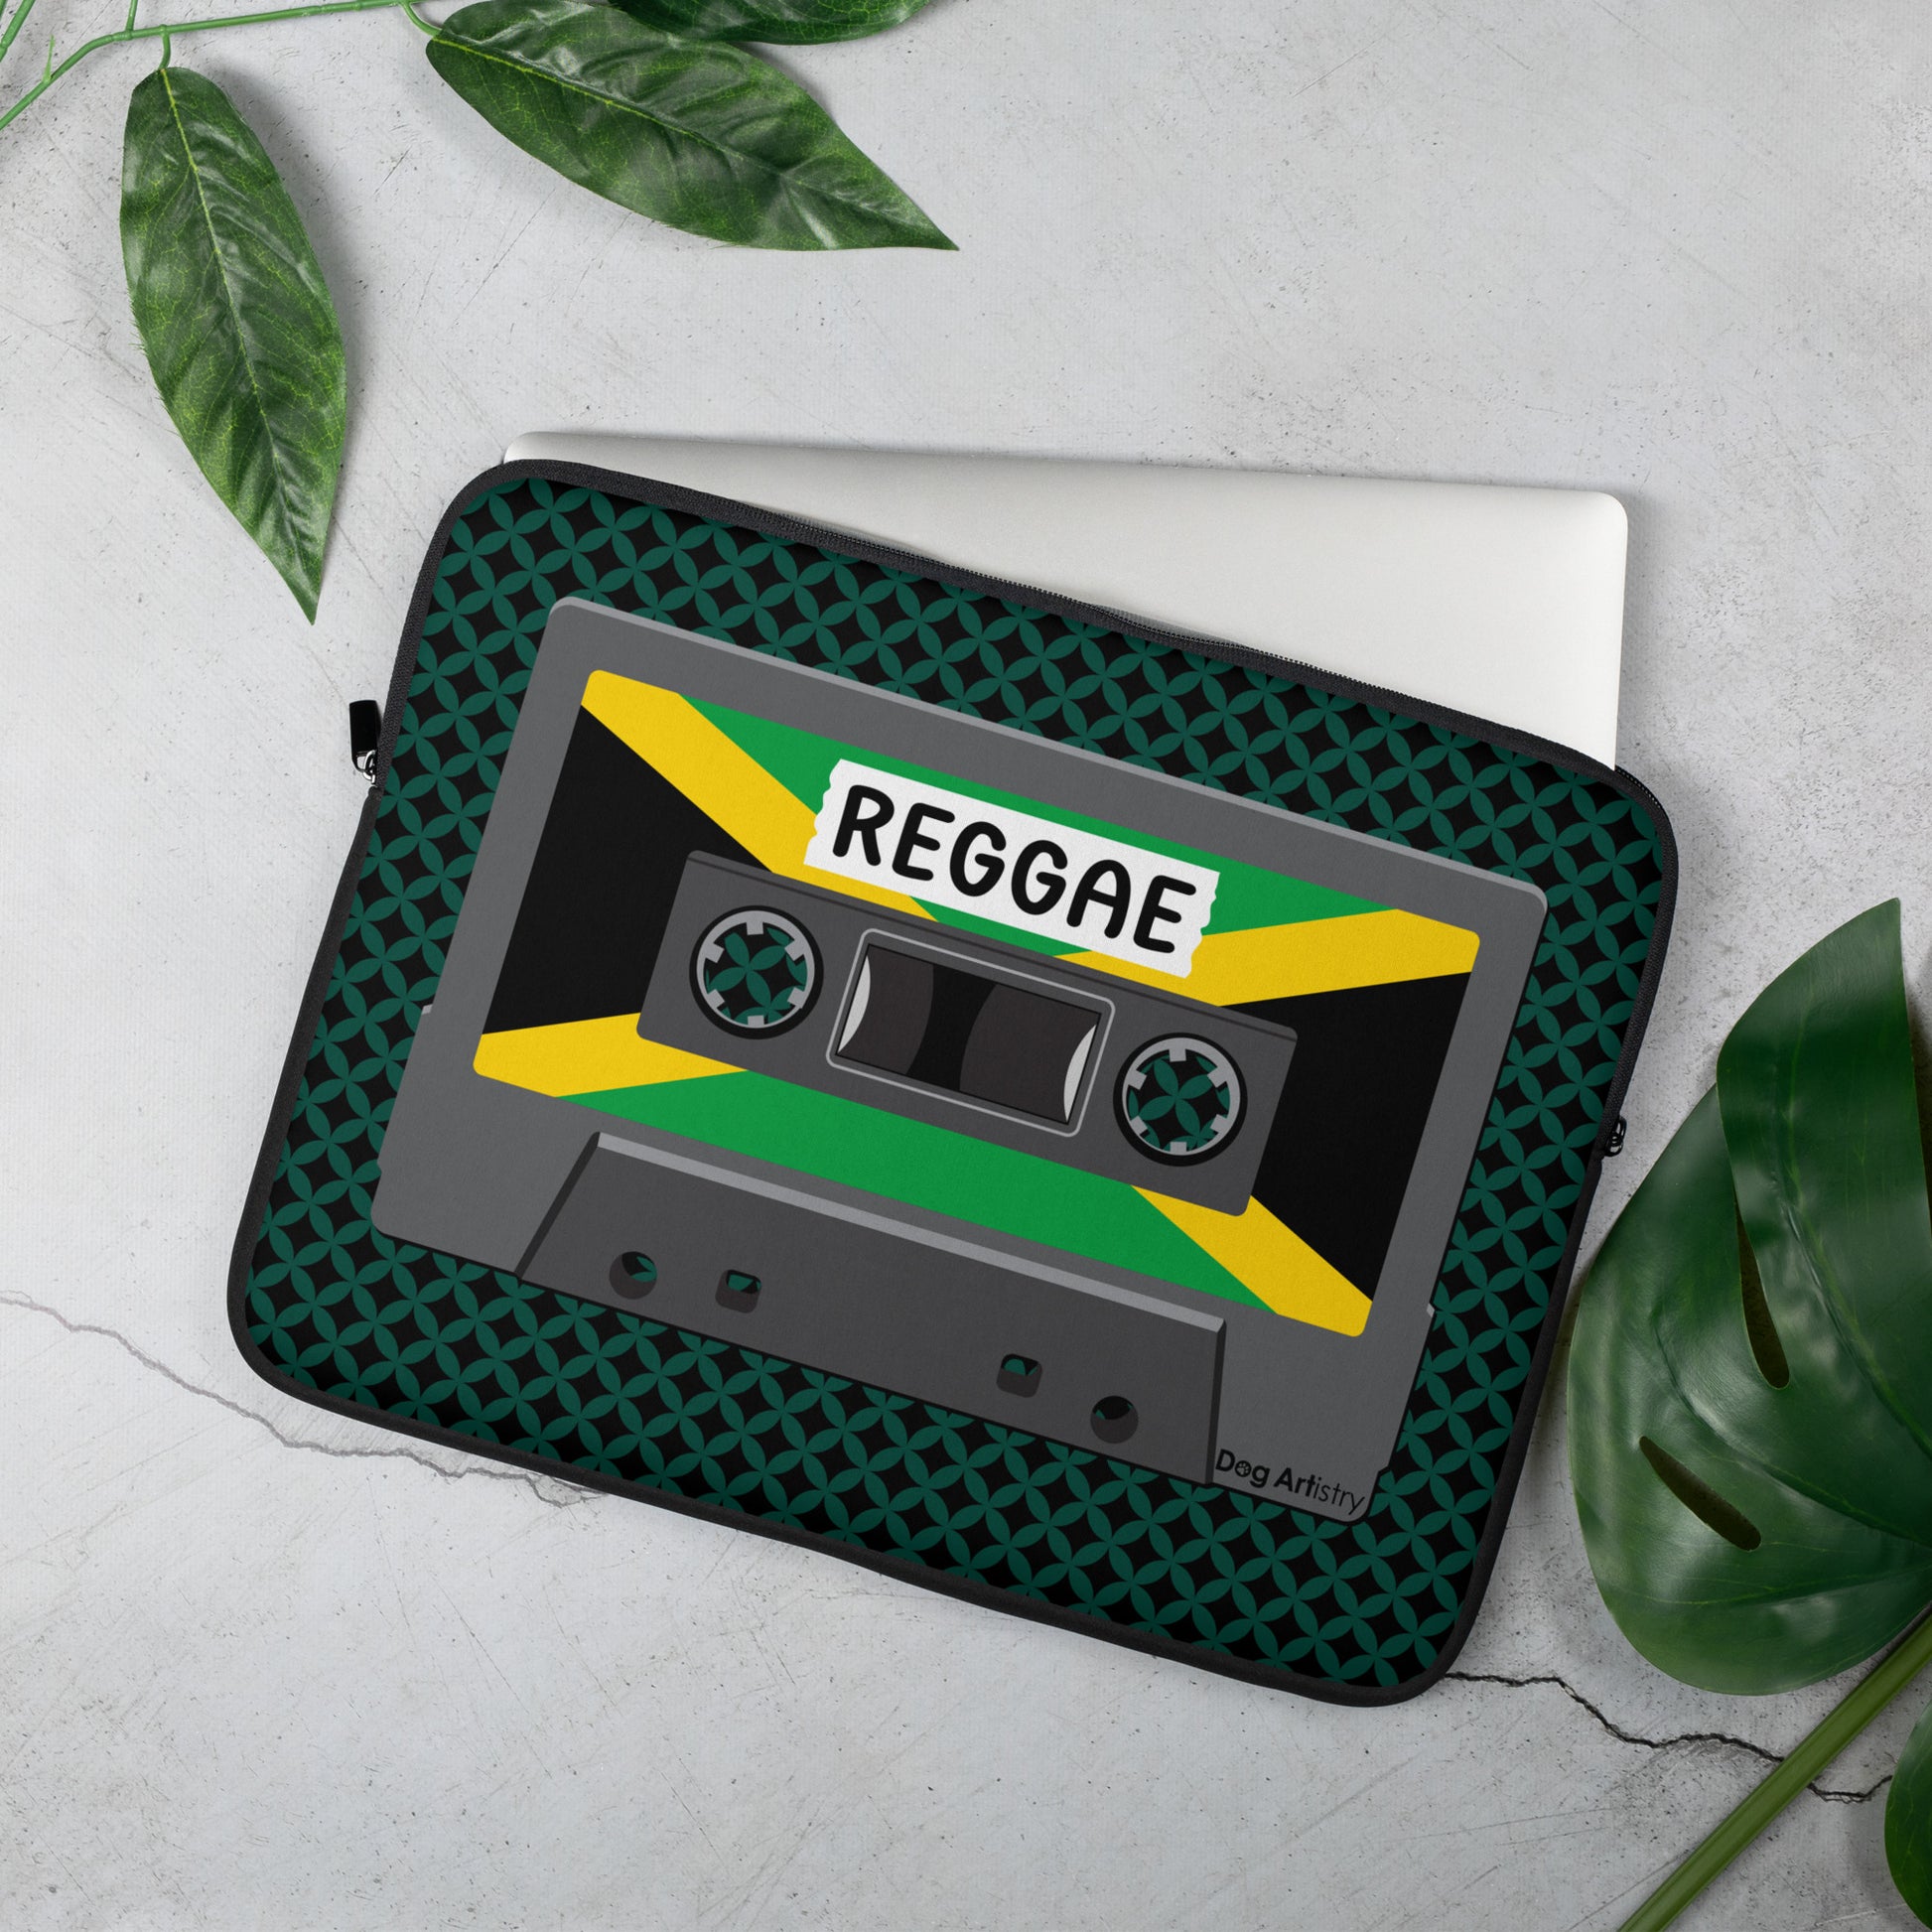 Cassette Tape Reggae music with Jamaican flag on cassette laptop sleeve designed by Dog Artistry.